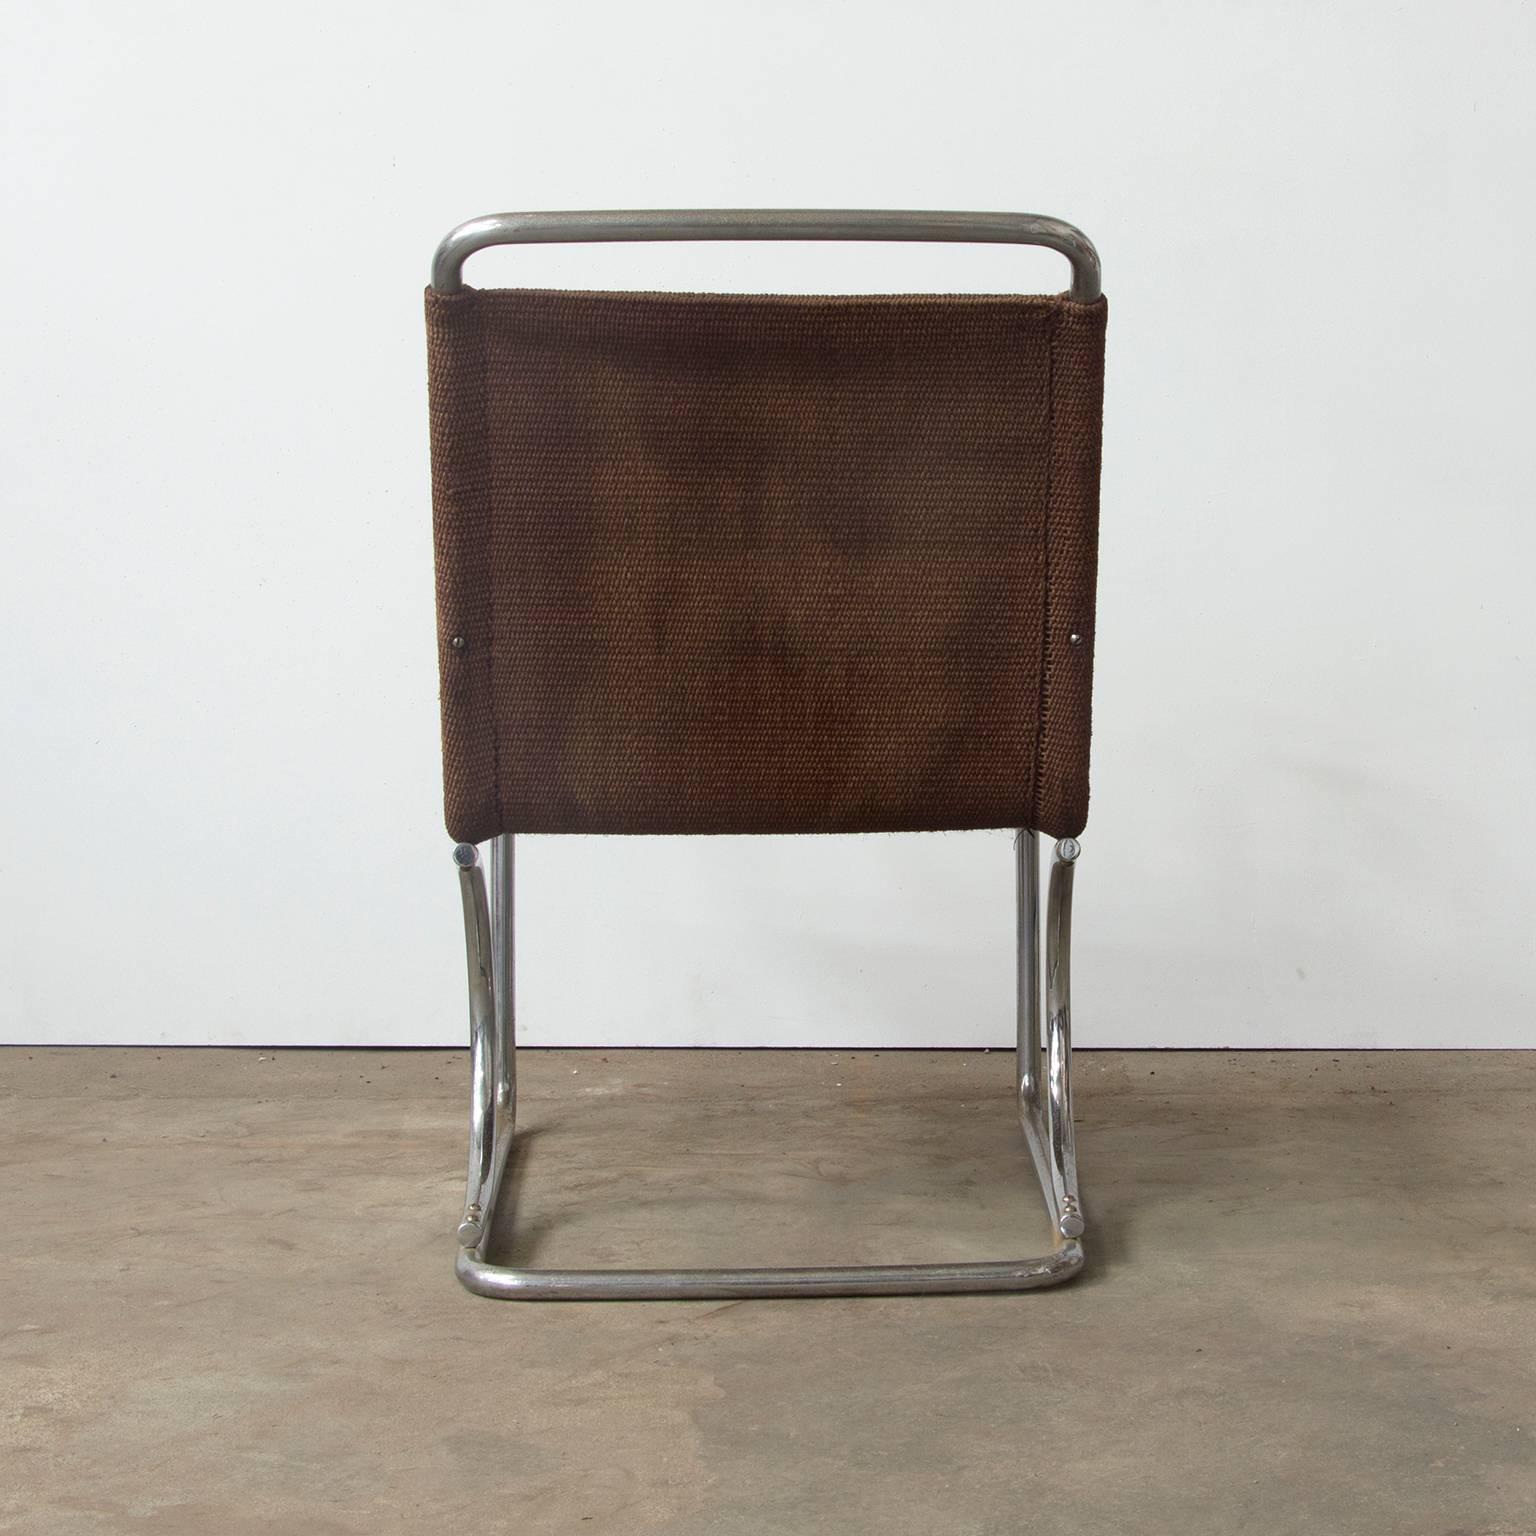 Dutch Circa 1930, Original, Early Tubular Easy Chair with Original Robe Woven Seat For Sale